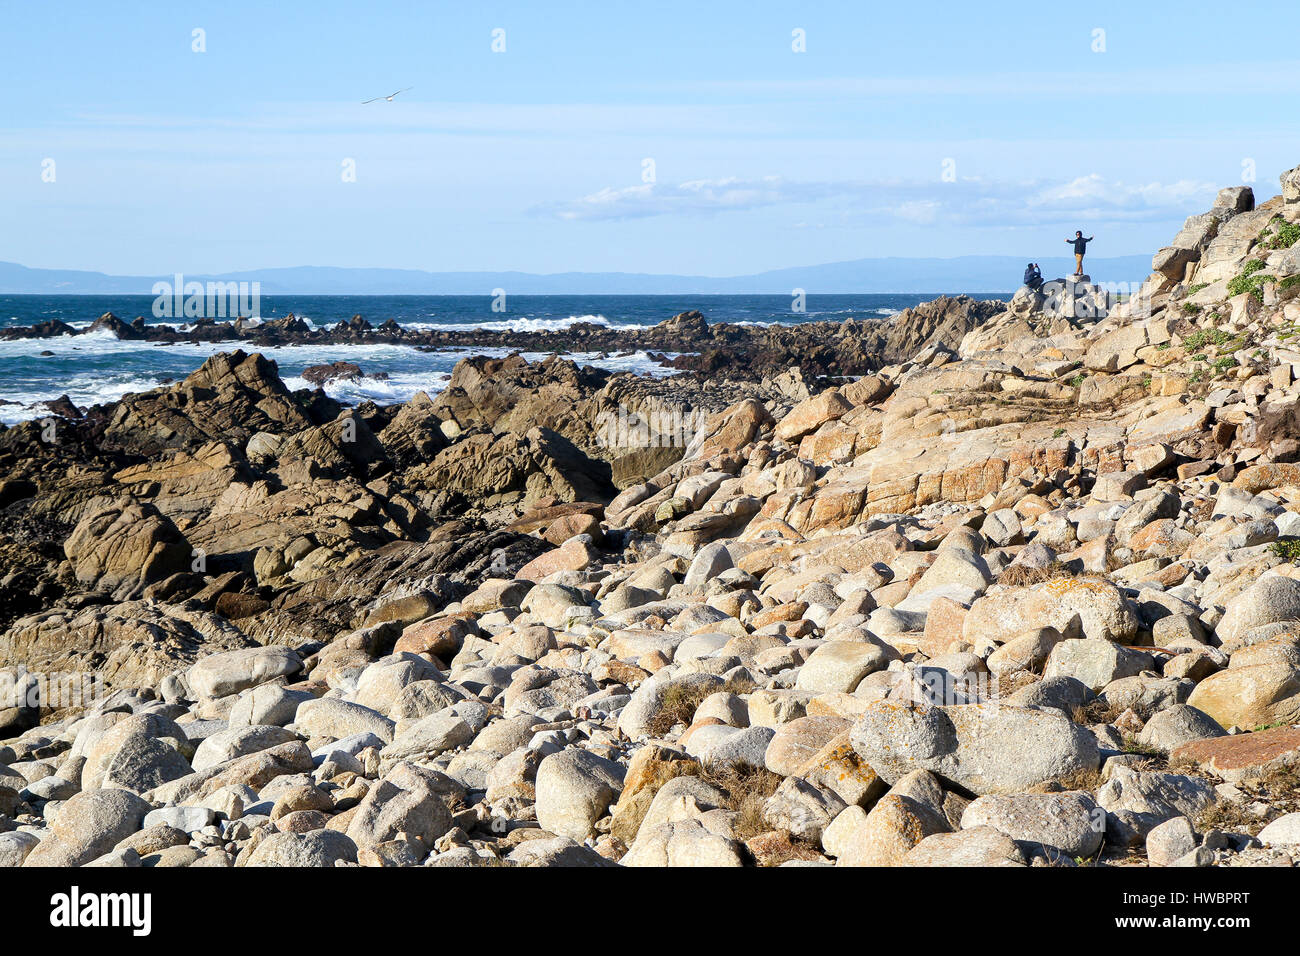 The rocky coastline along 17-Mile Drive, Monterey Peninsula, California, United States Stock Photo